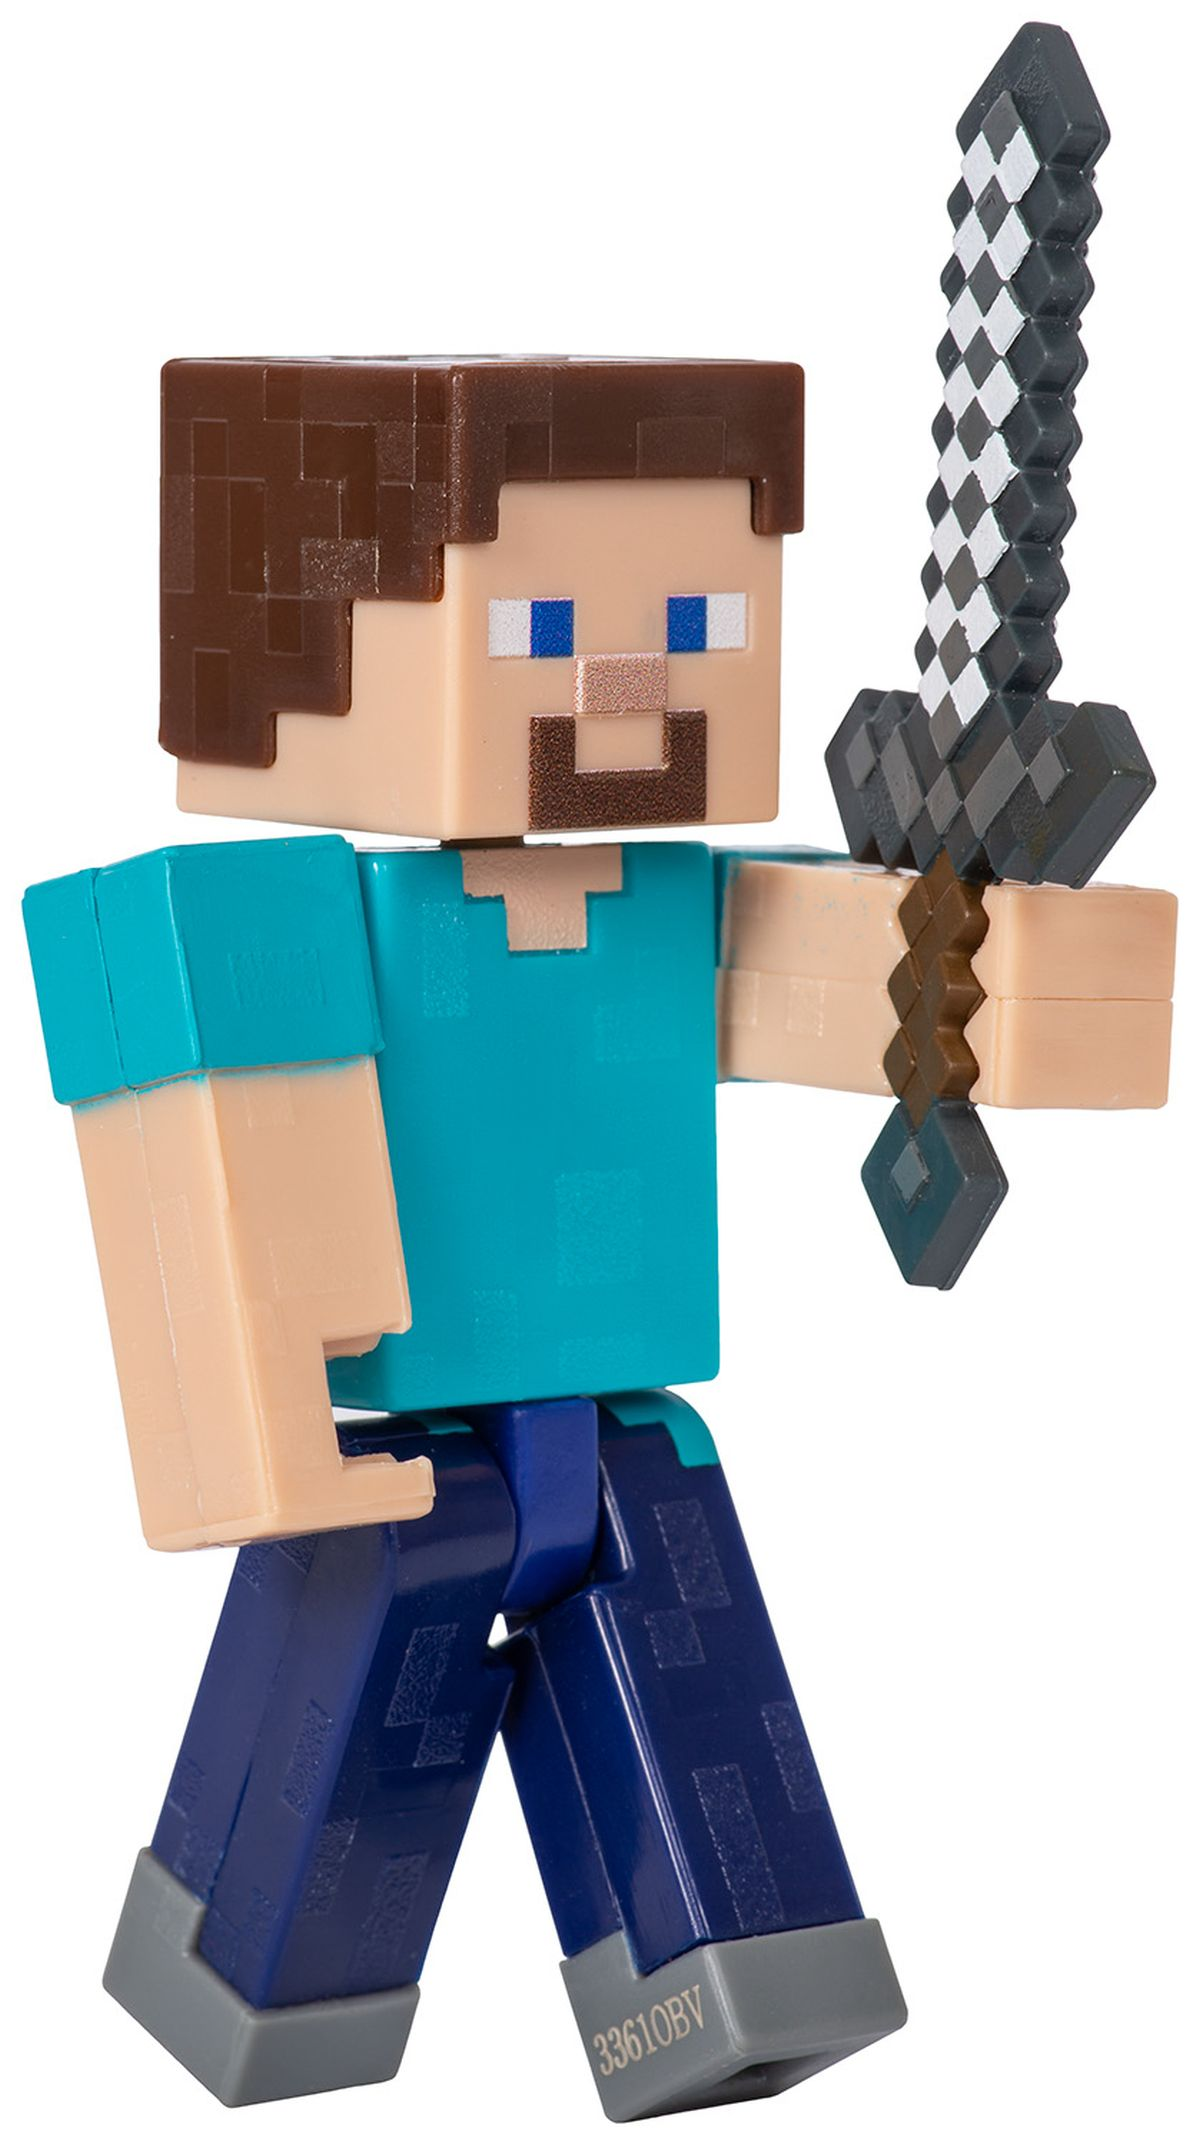 Minecraft - Figur Steve